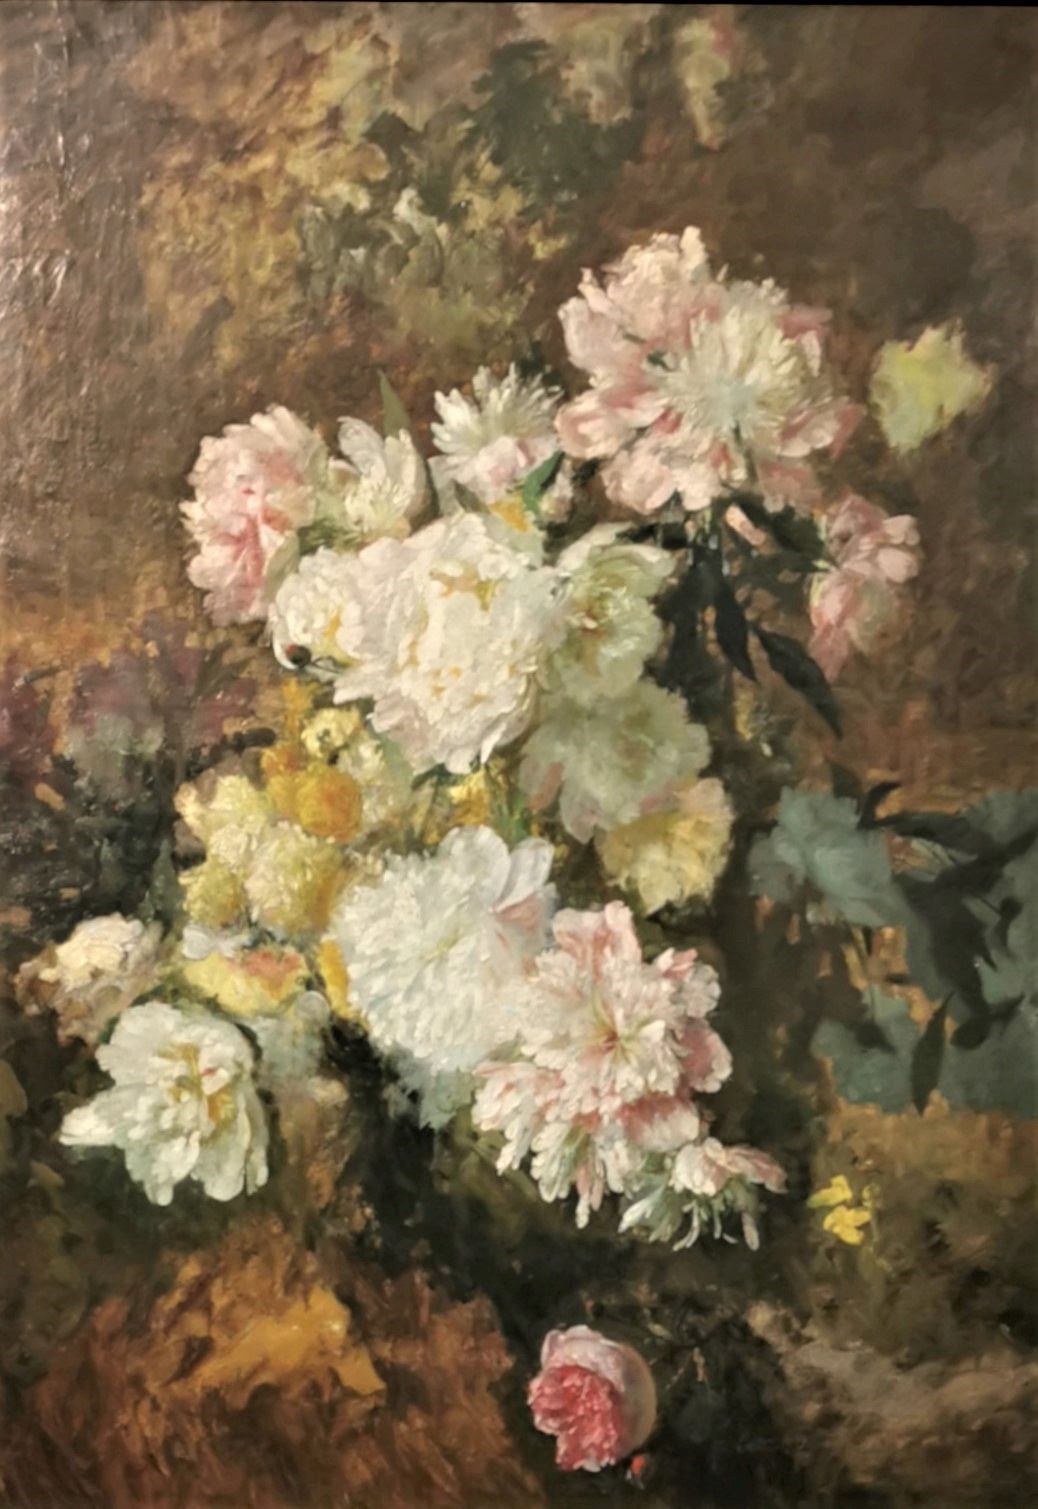 CASTEX-DEGRANGE Adolphe Louis (1840-1918) 一束花。布面油画，右上角有签名。115 x 88厘米。